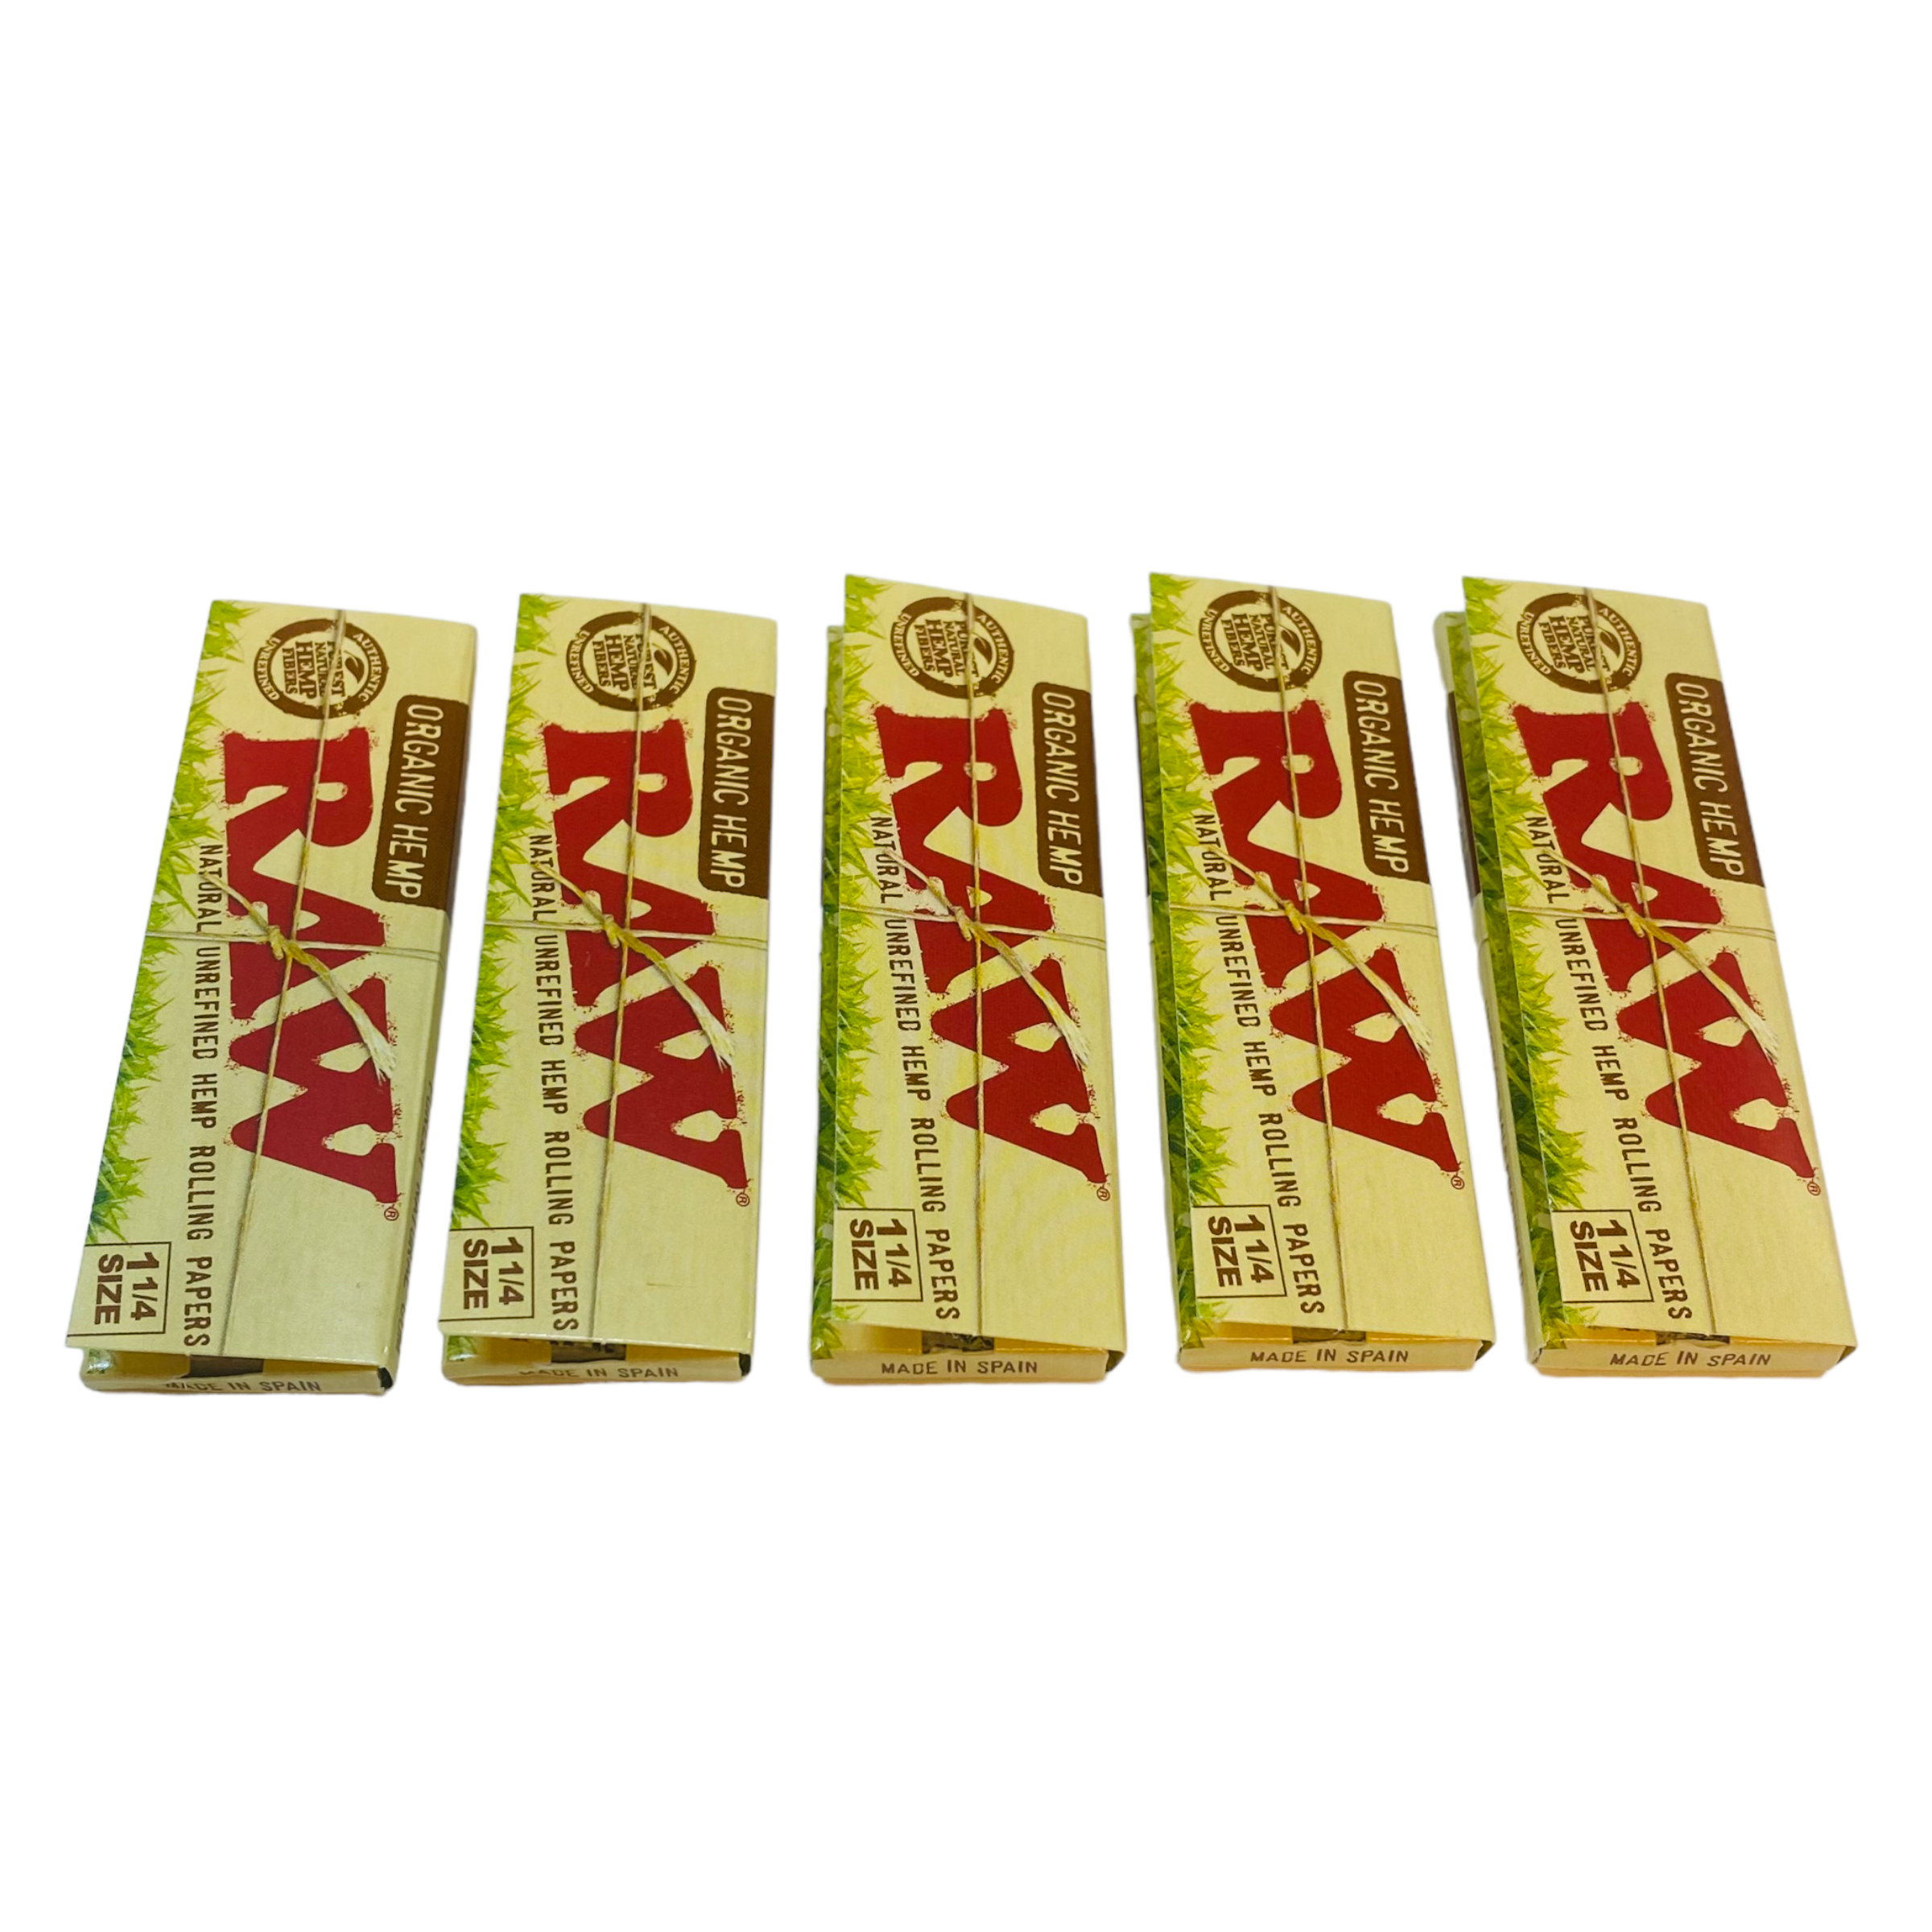 RAW - Organic 1.25 Papers - 5 Packs